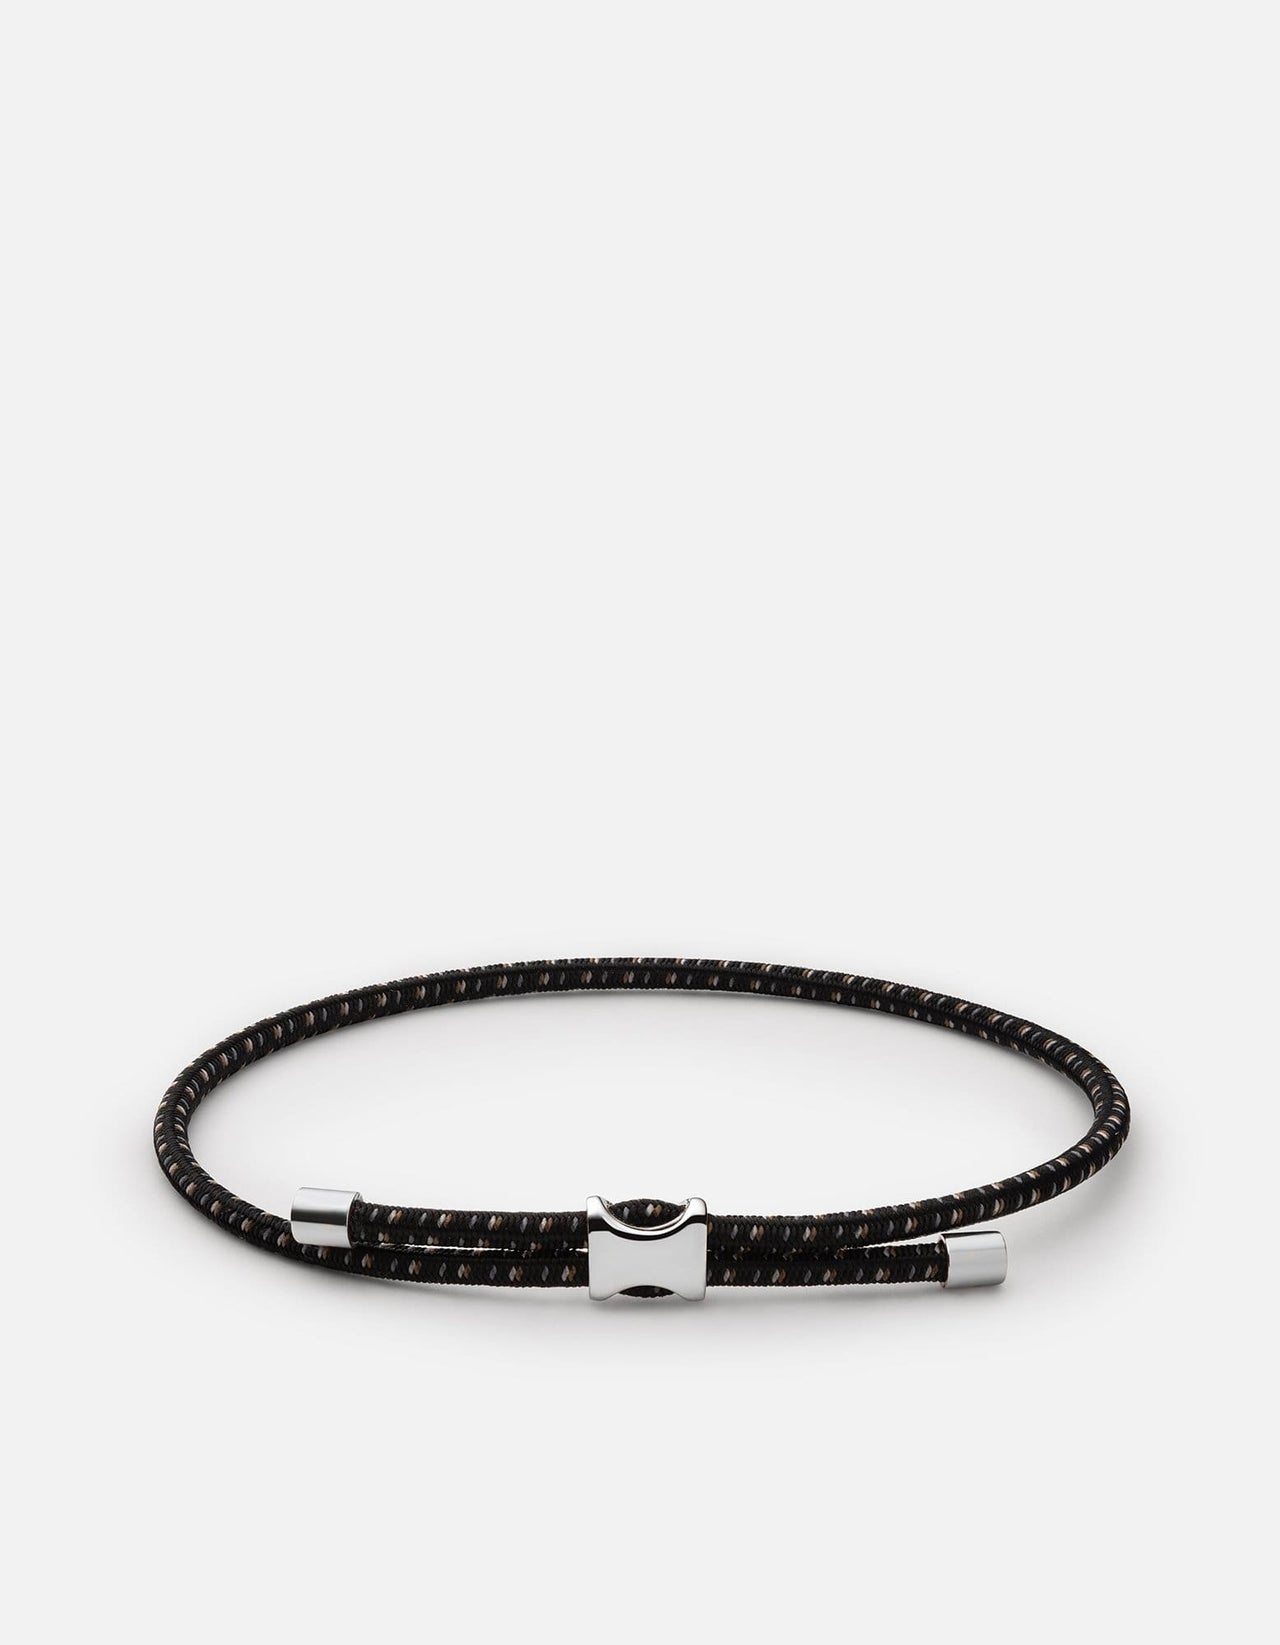 Orson Pull Bungee Rope Bracelet, Sterling Silver | Men's Bracelets ...